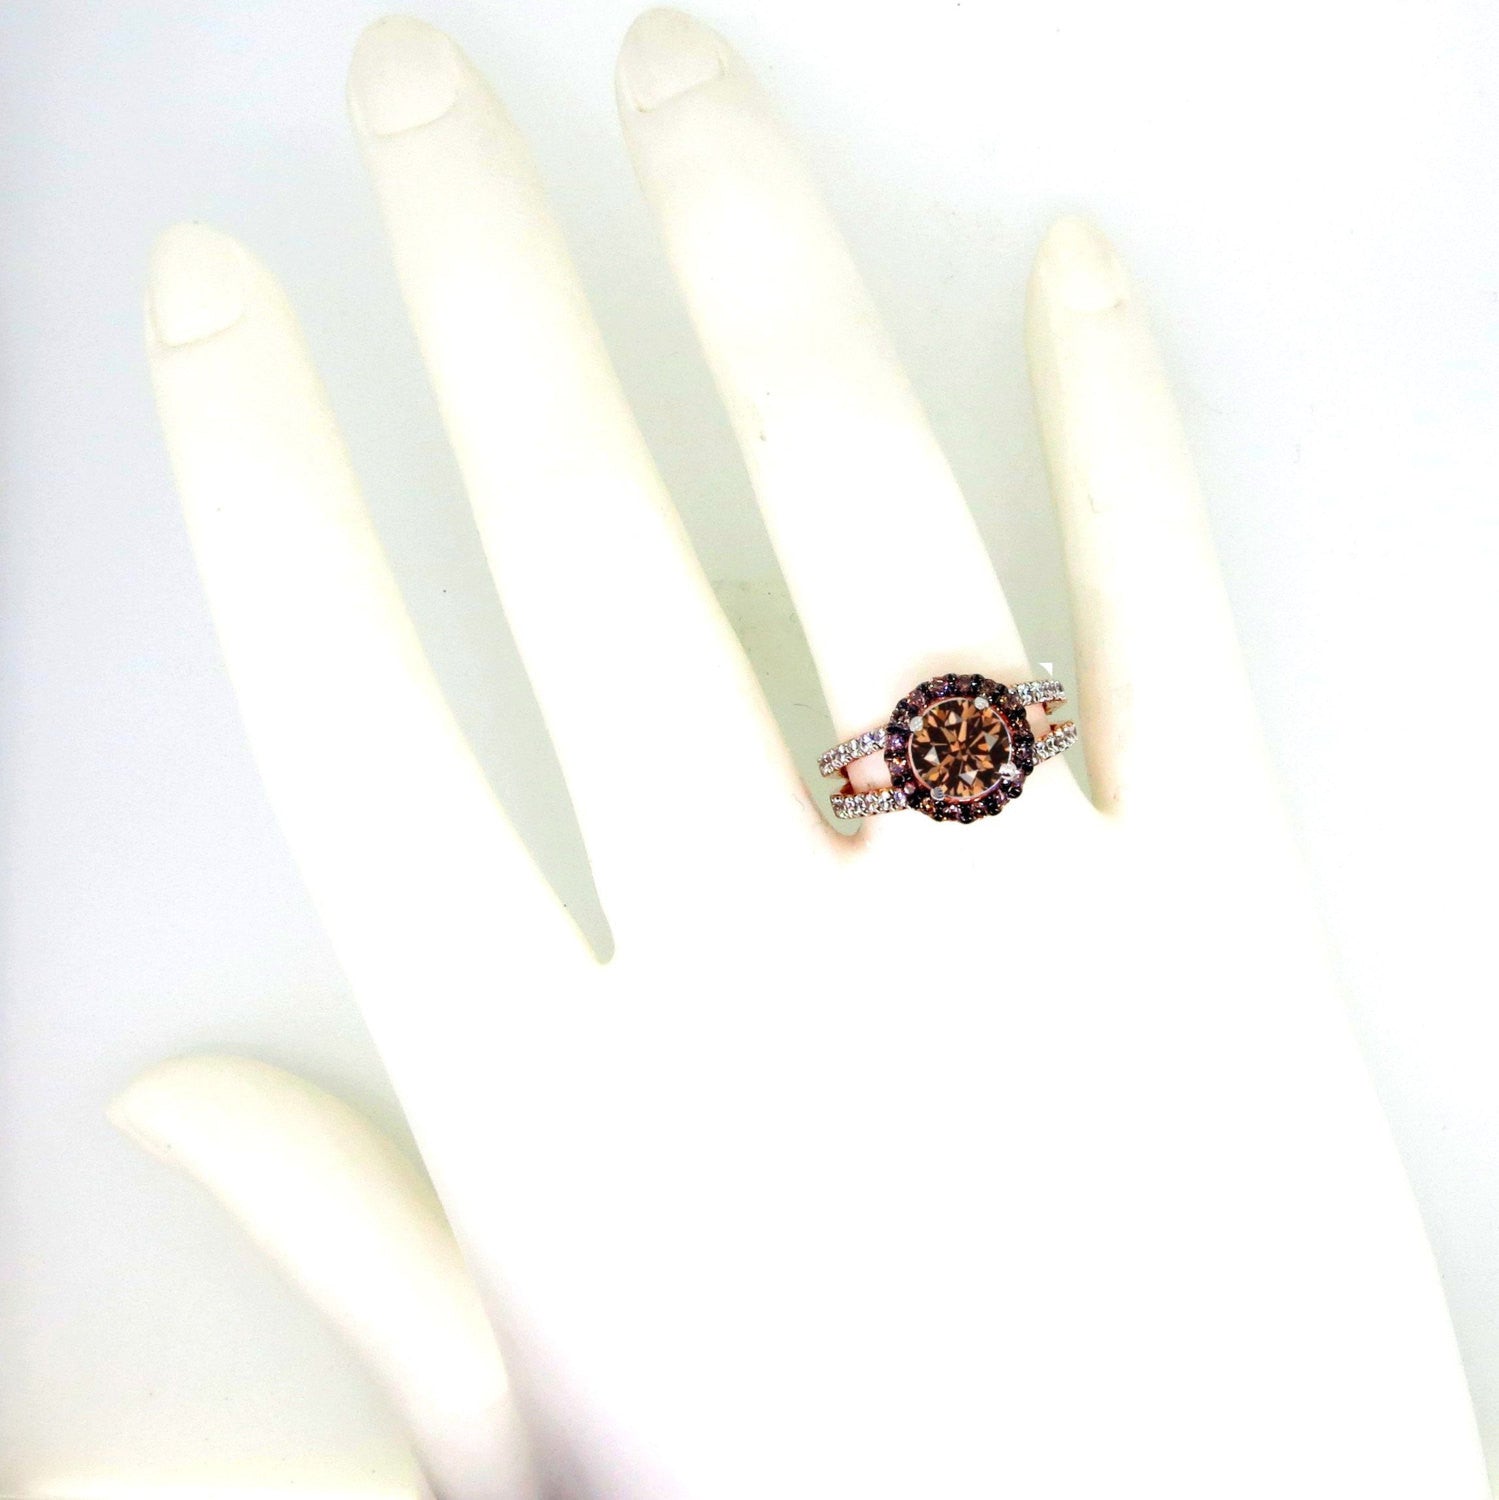 1 Carat Brown Diamond Floating Halo Rose Gold, White & Brown Diamond Engagement Ring, Anniversary Ring - BD94625